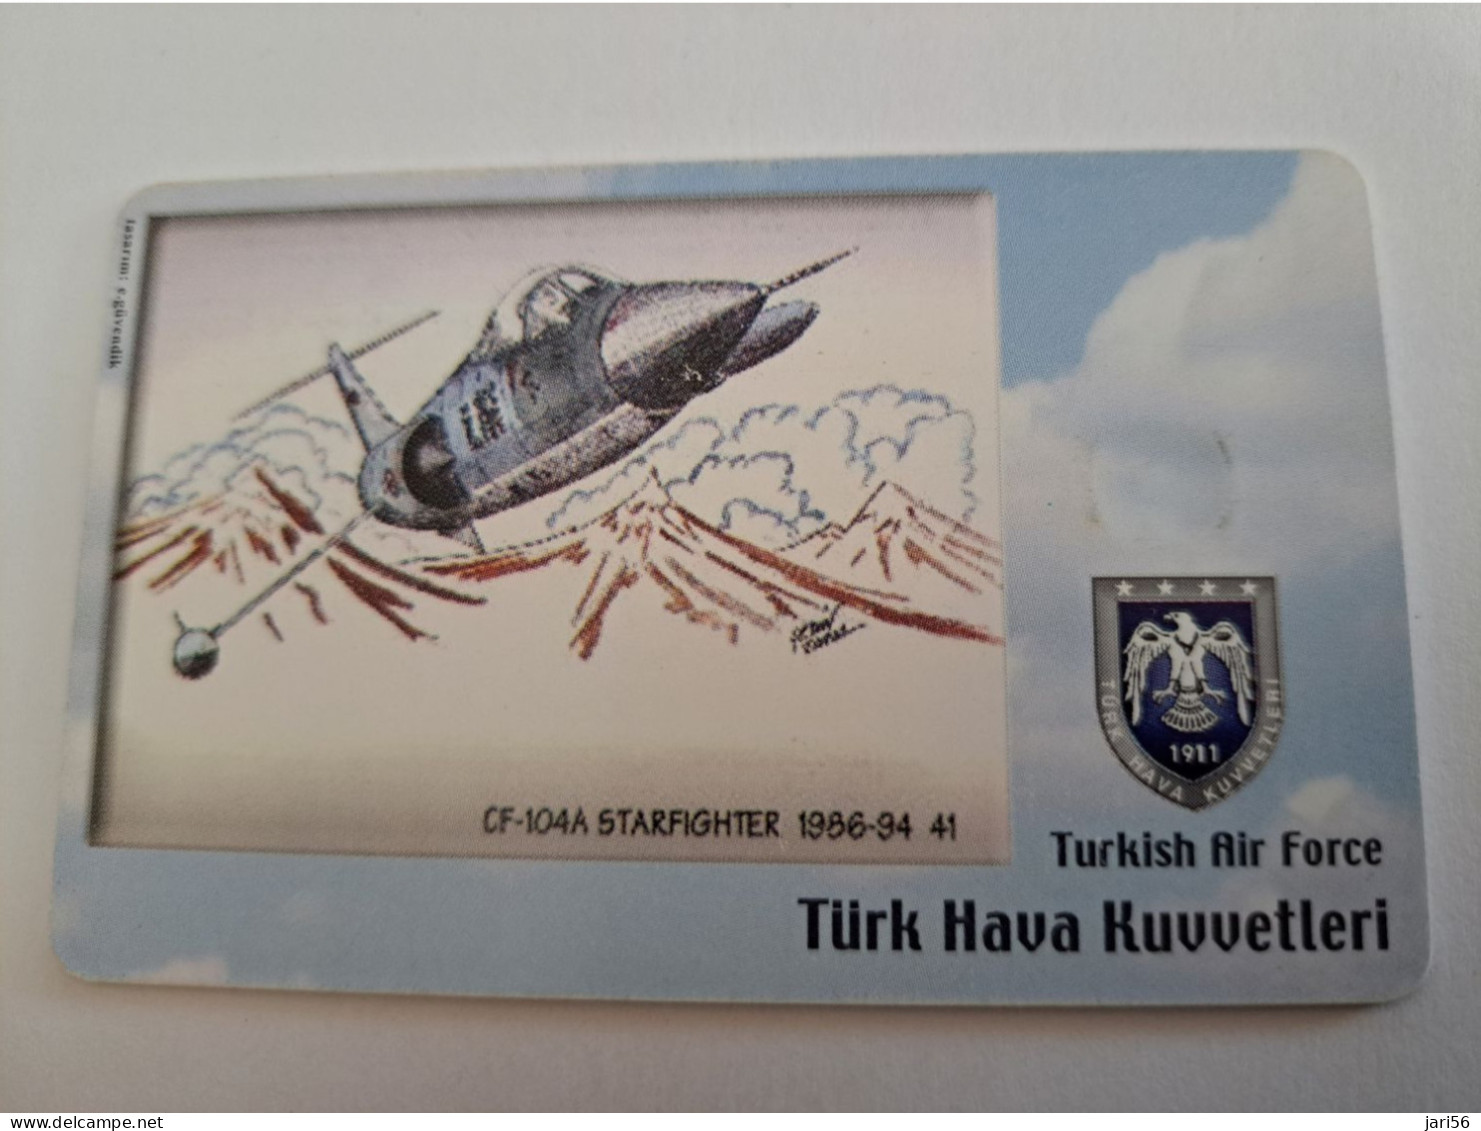 TURKIJE / 50 UNITS/ CHIPCARD/ TURKISH AIR FORCE  / DIFFERENT PLANES /        Fine Used Card  **15417** - Türkei